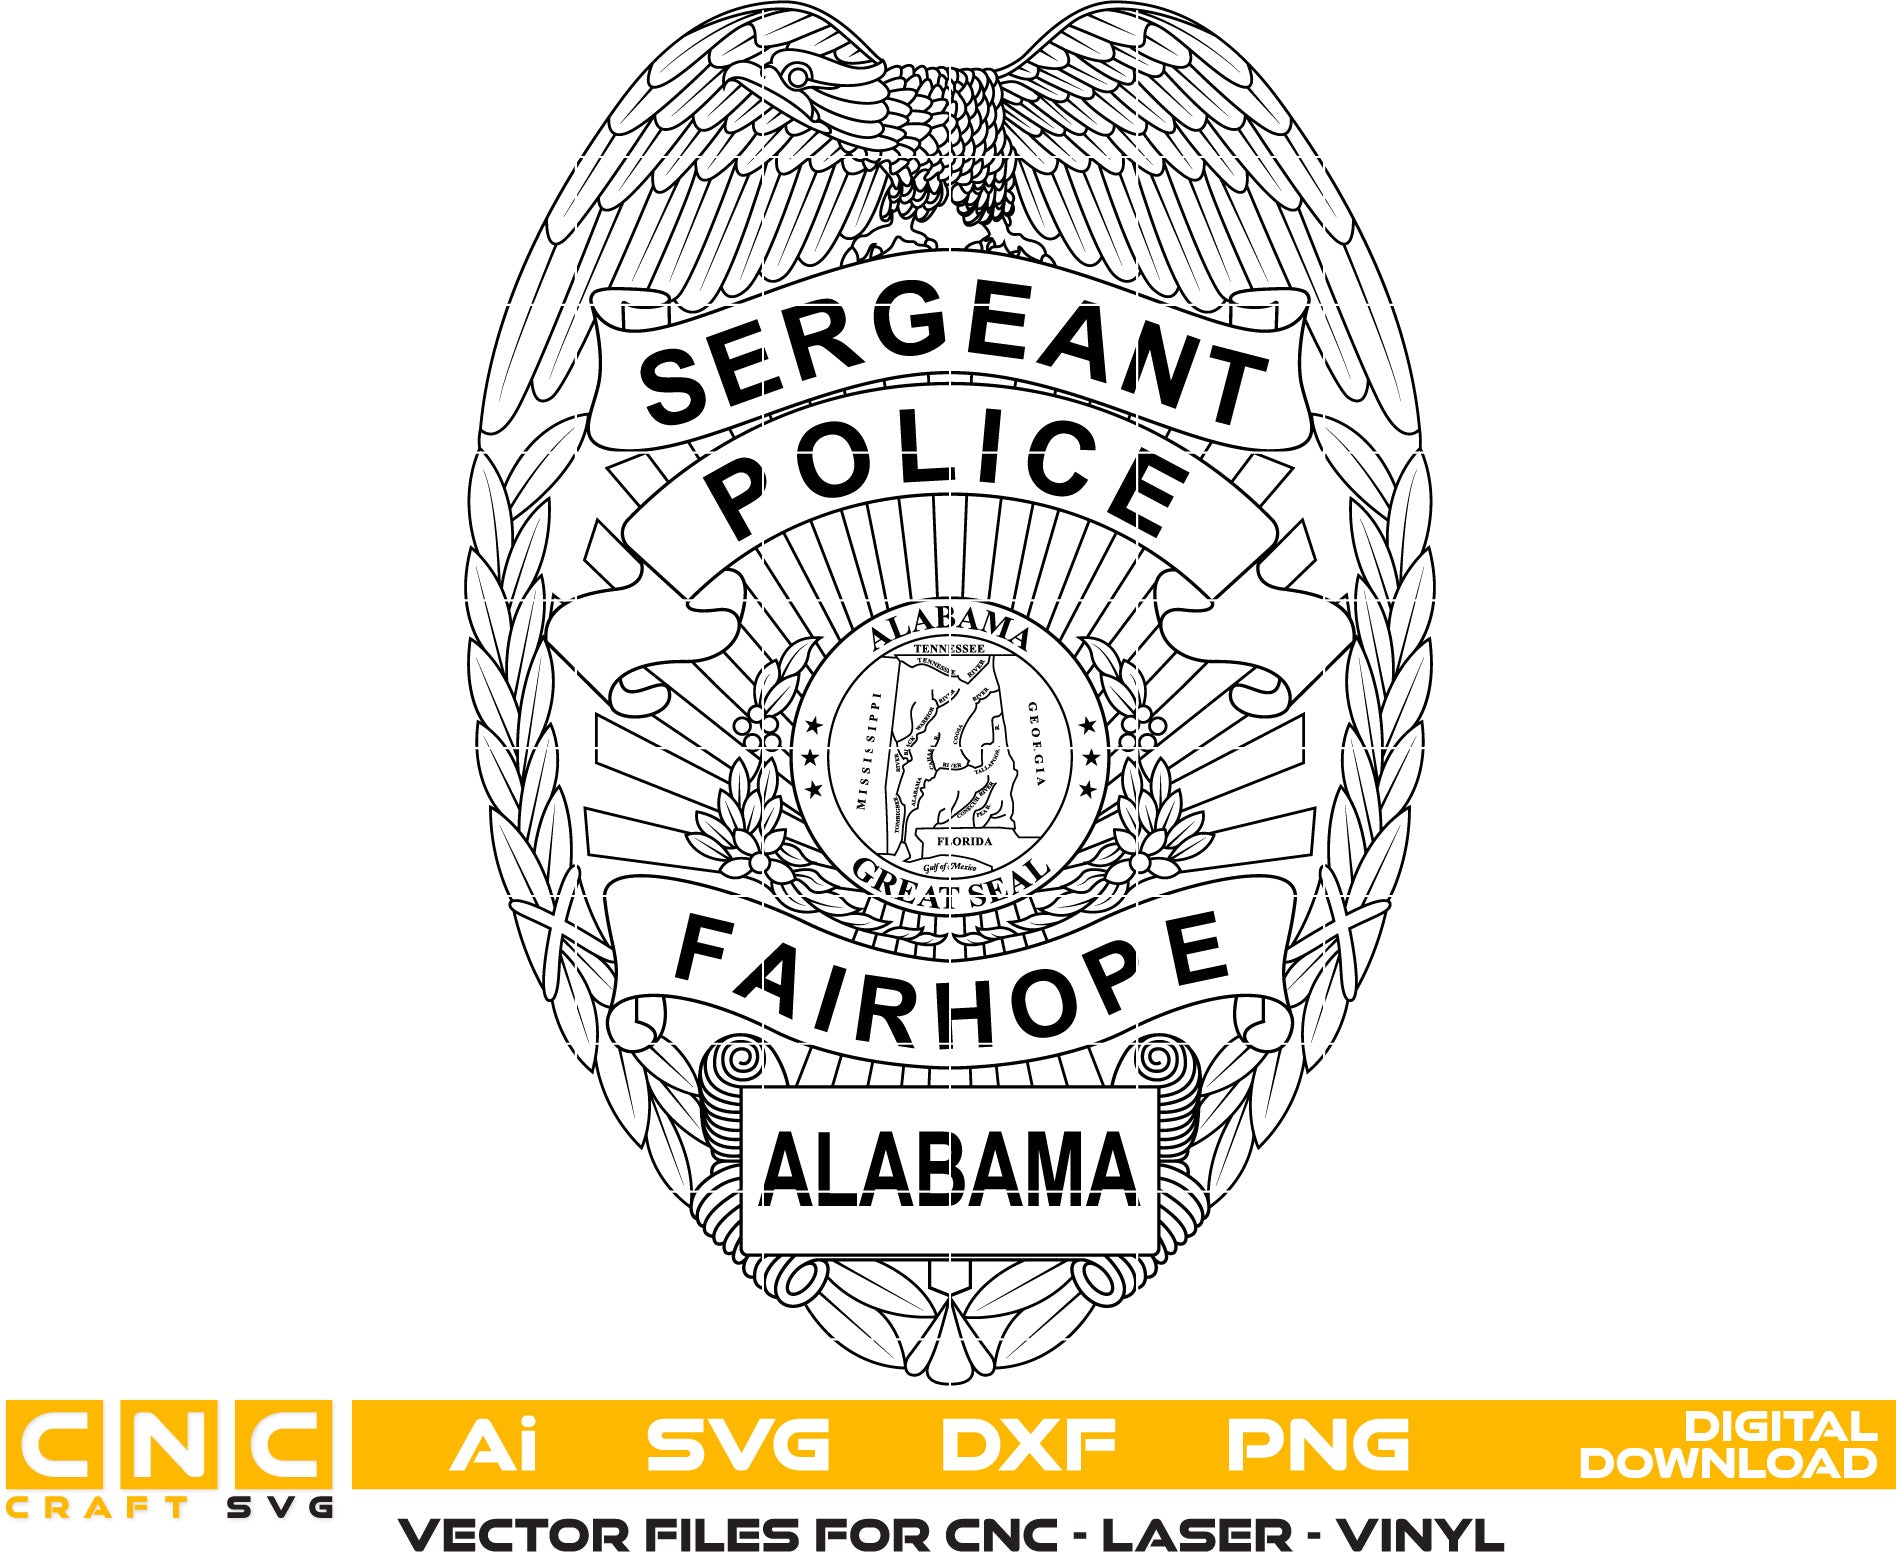 Alabama Fairhope Police Sergeat Badge Vector Art